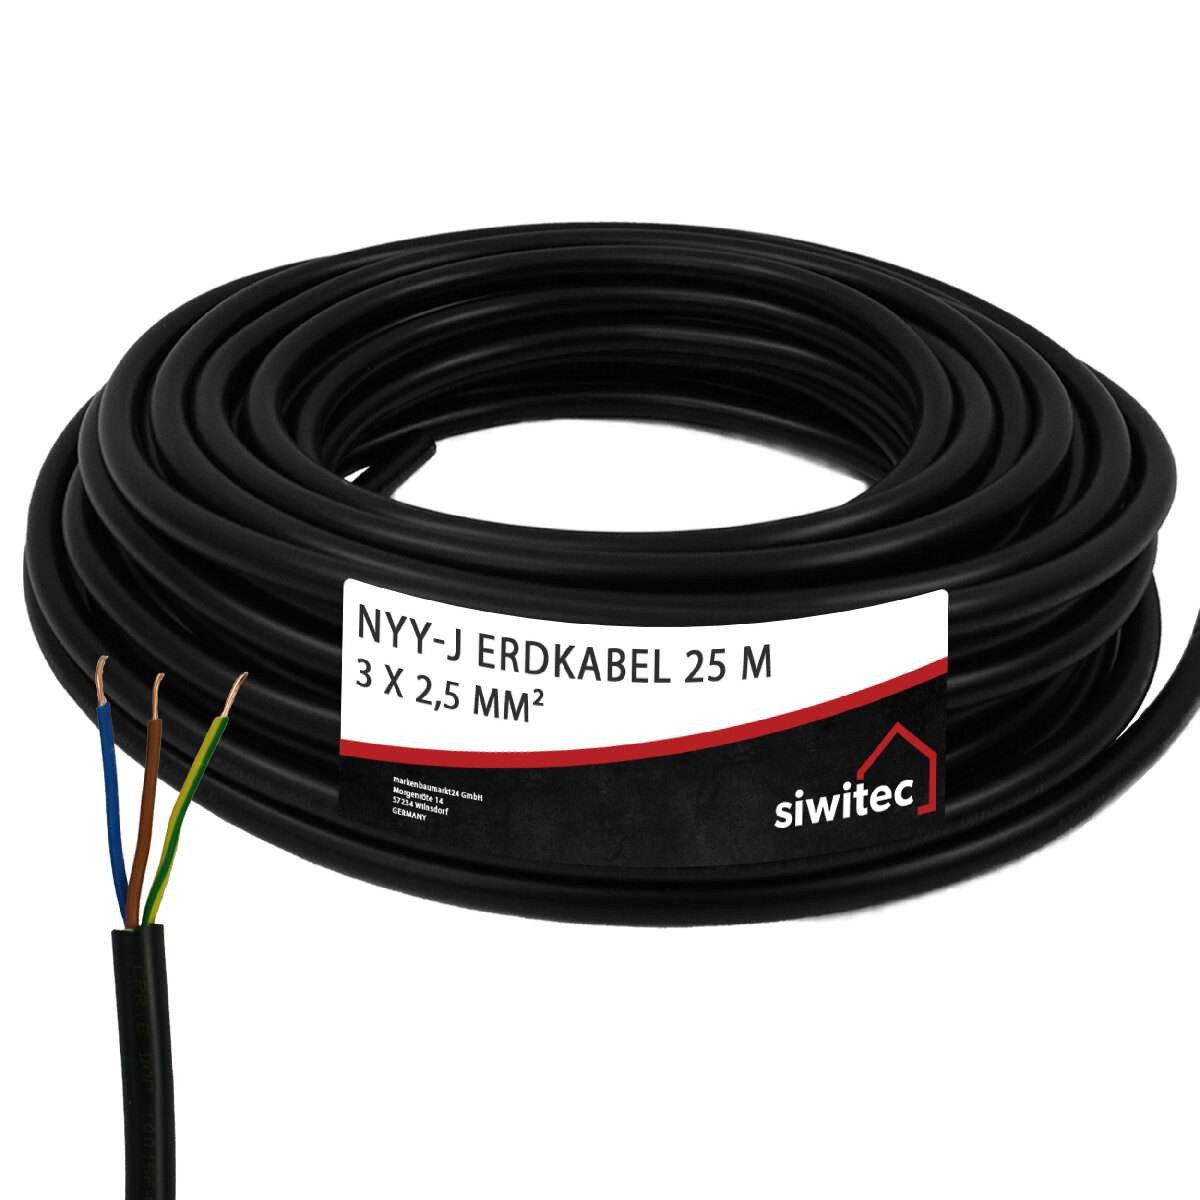 siwitec NYY-Kabel mit 3 Adern 2,5 mm² Aderquerschnitt in 25 m Länge Erdkabel, NYY-Kabel, (2500 cm), NYY-J Kabel, Polyvinylchlorid, Made in Germany, 2,5 mm² Aderquerschnitt